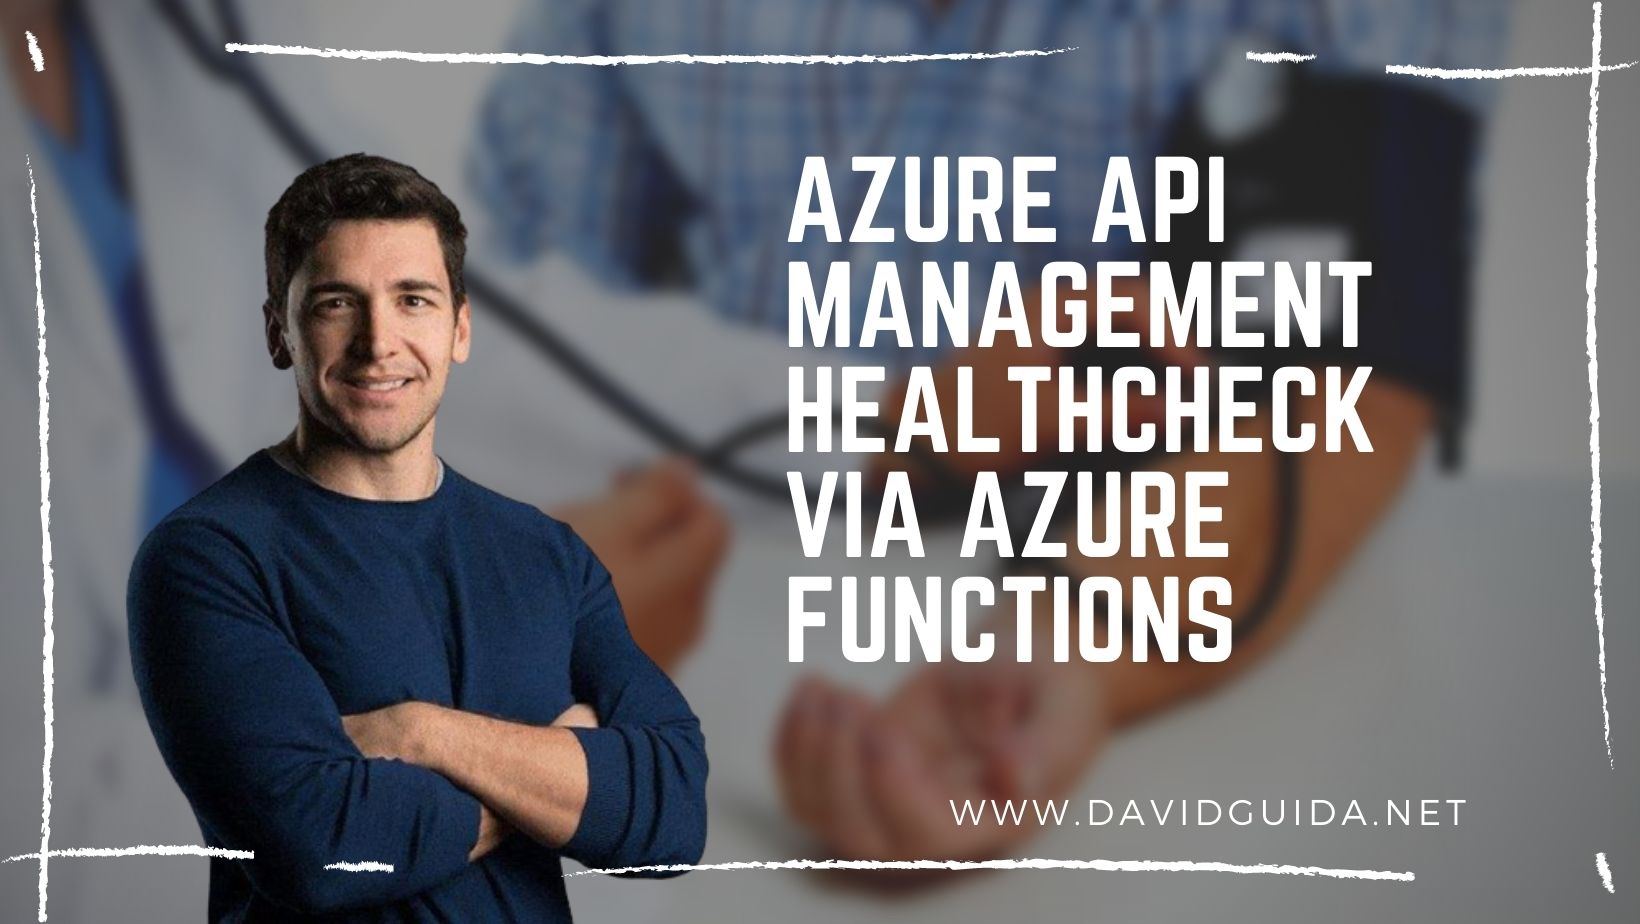 Azure API Management Healthcheck via Azure Functions